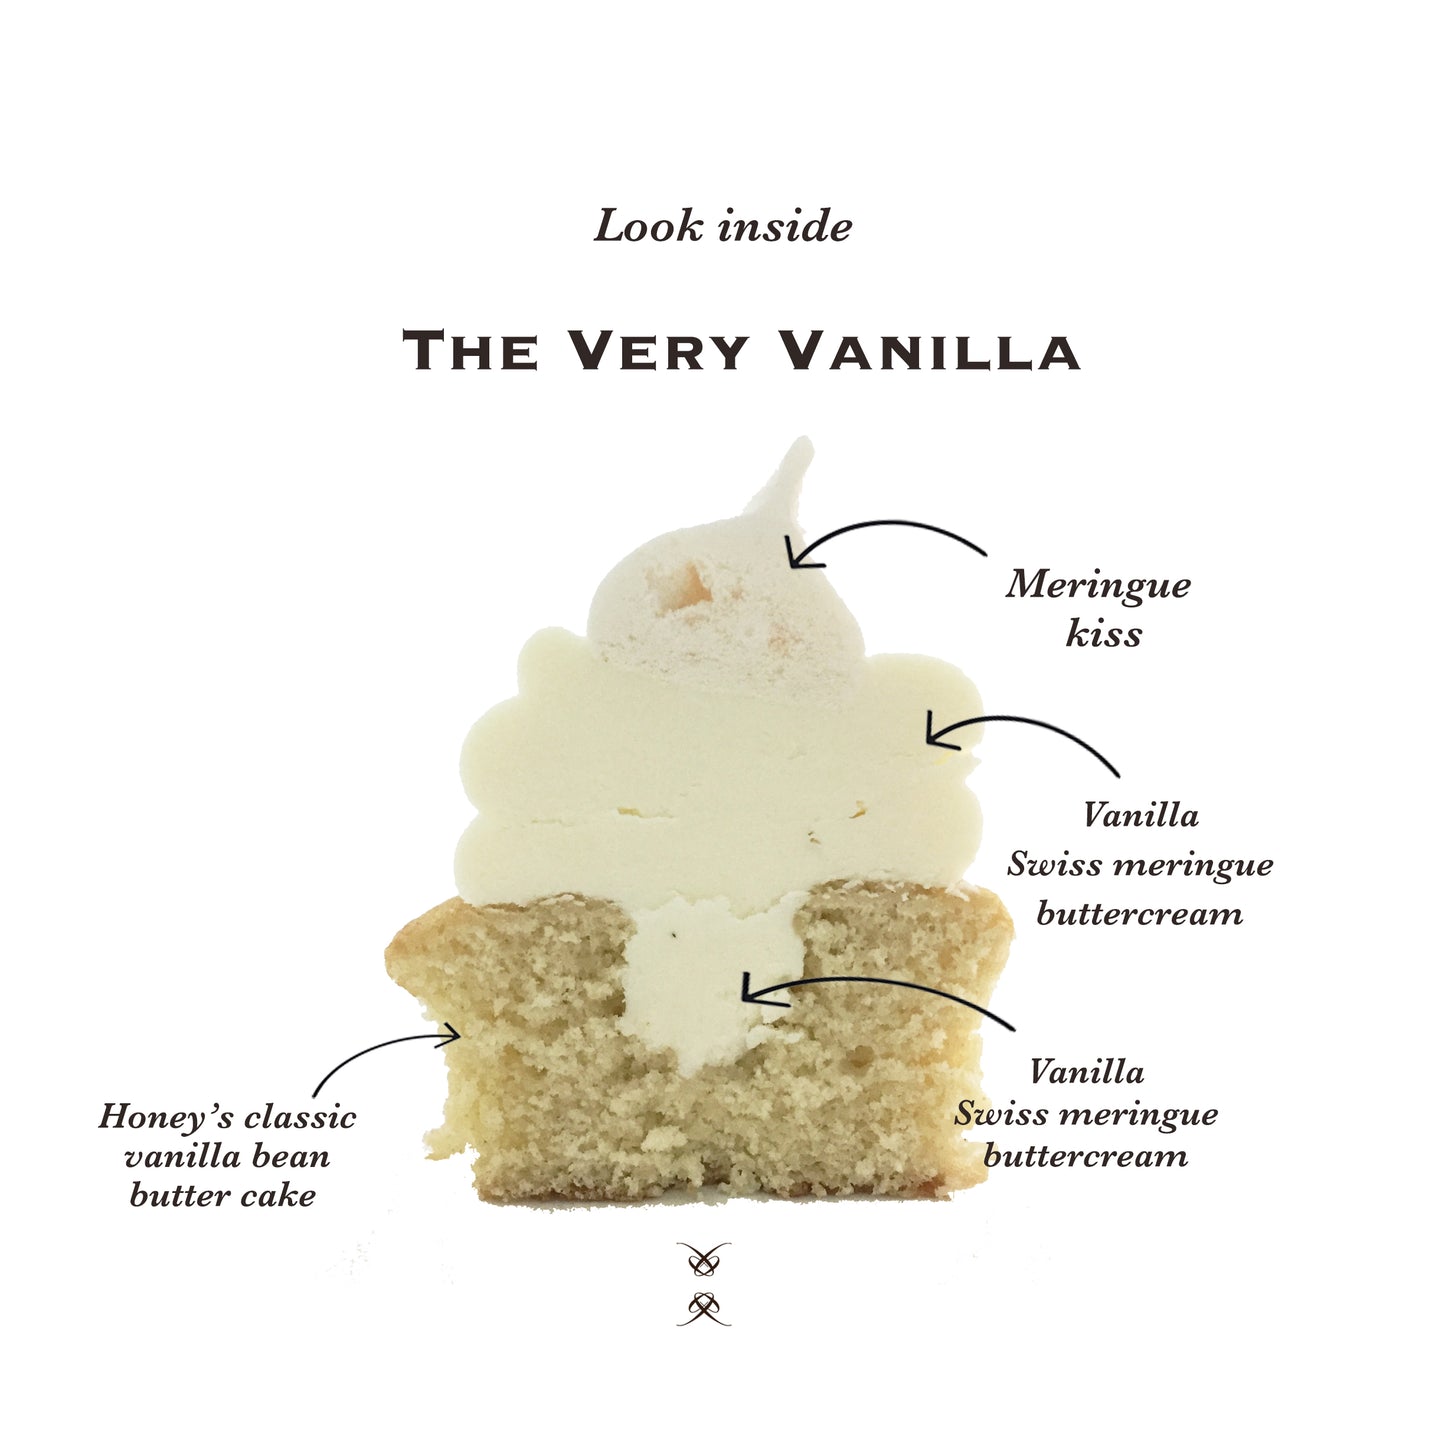 The Very Vanilla